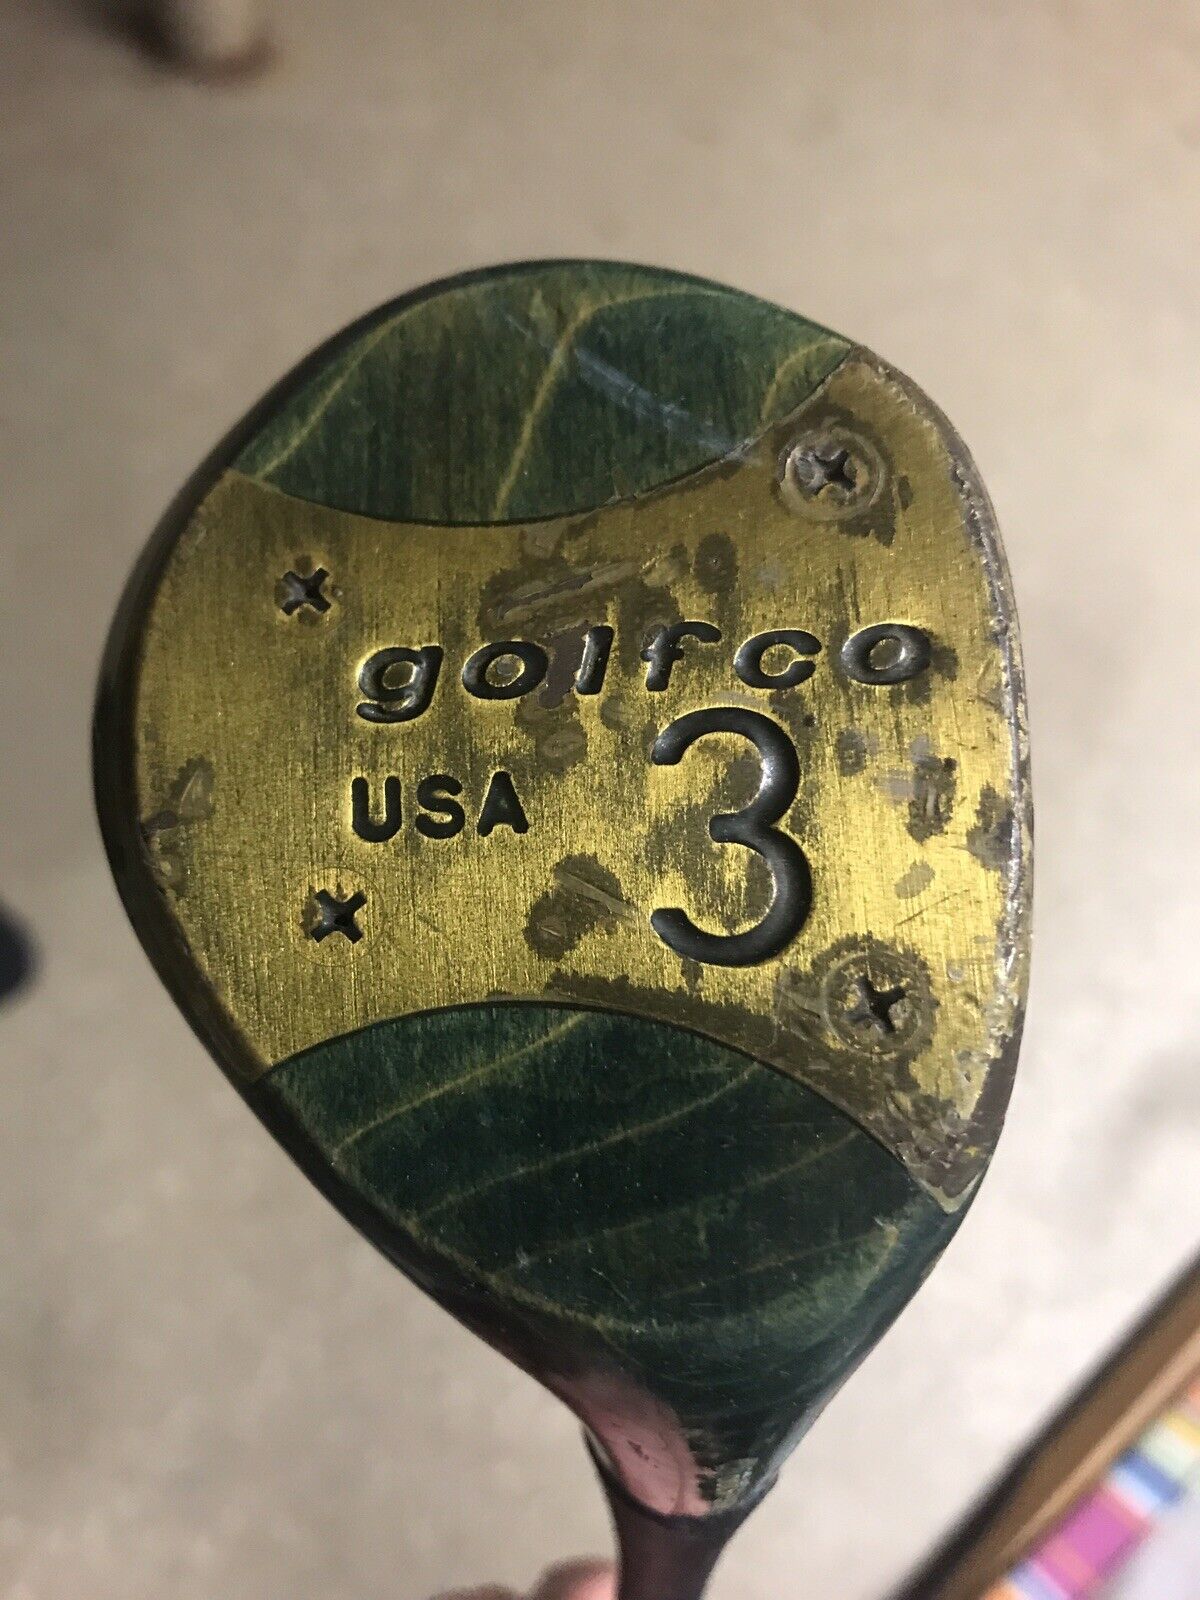 Ladies GolfCo USA Princess 3 Wood.Steel Shaft. Chevron grip - EUC